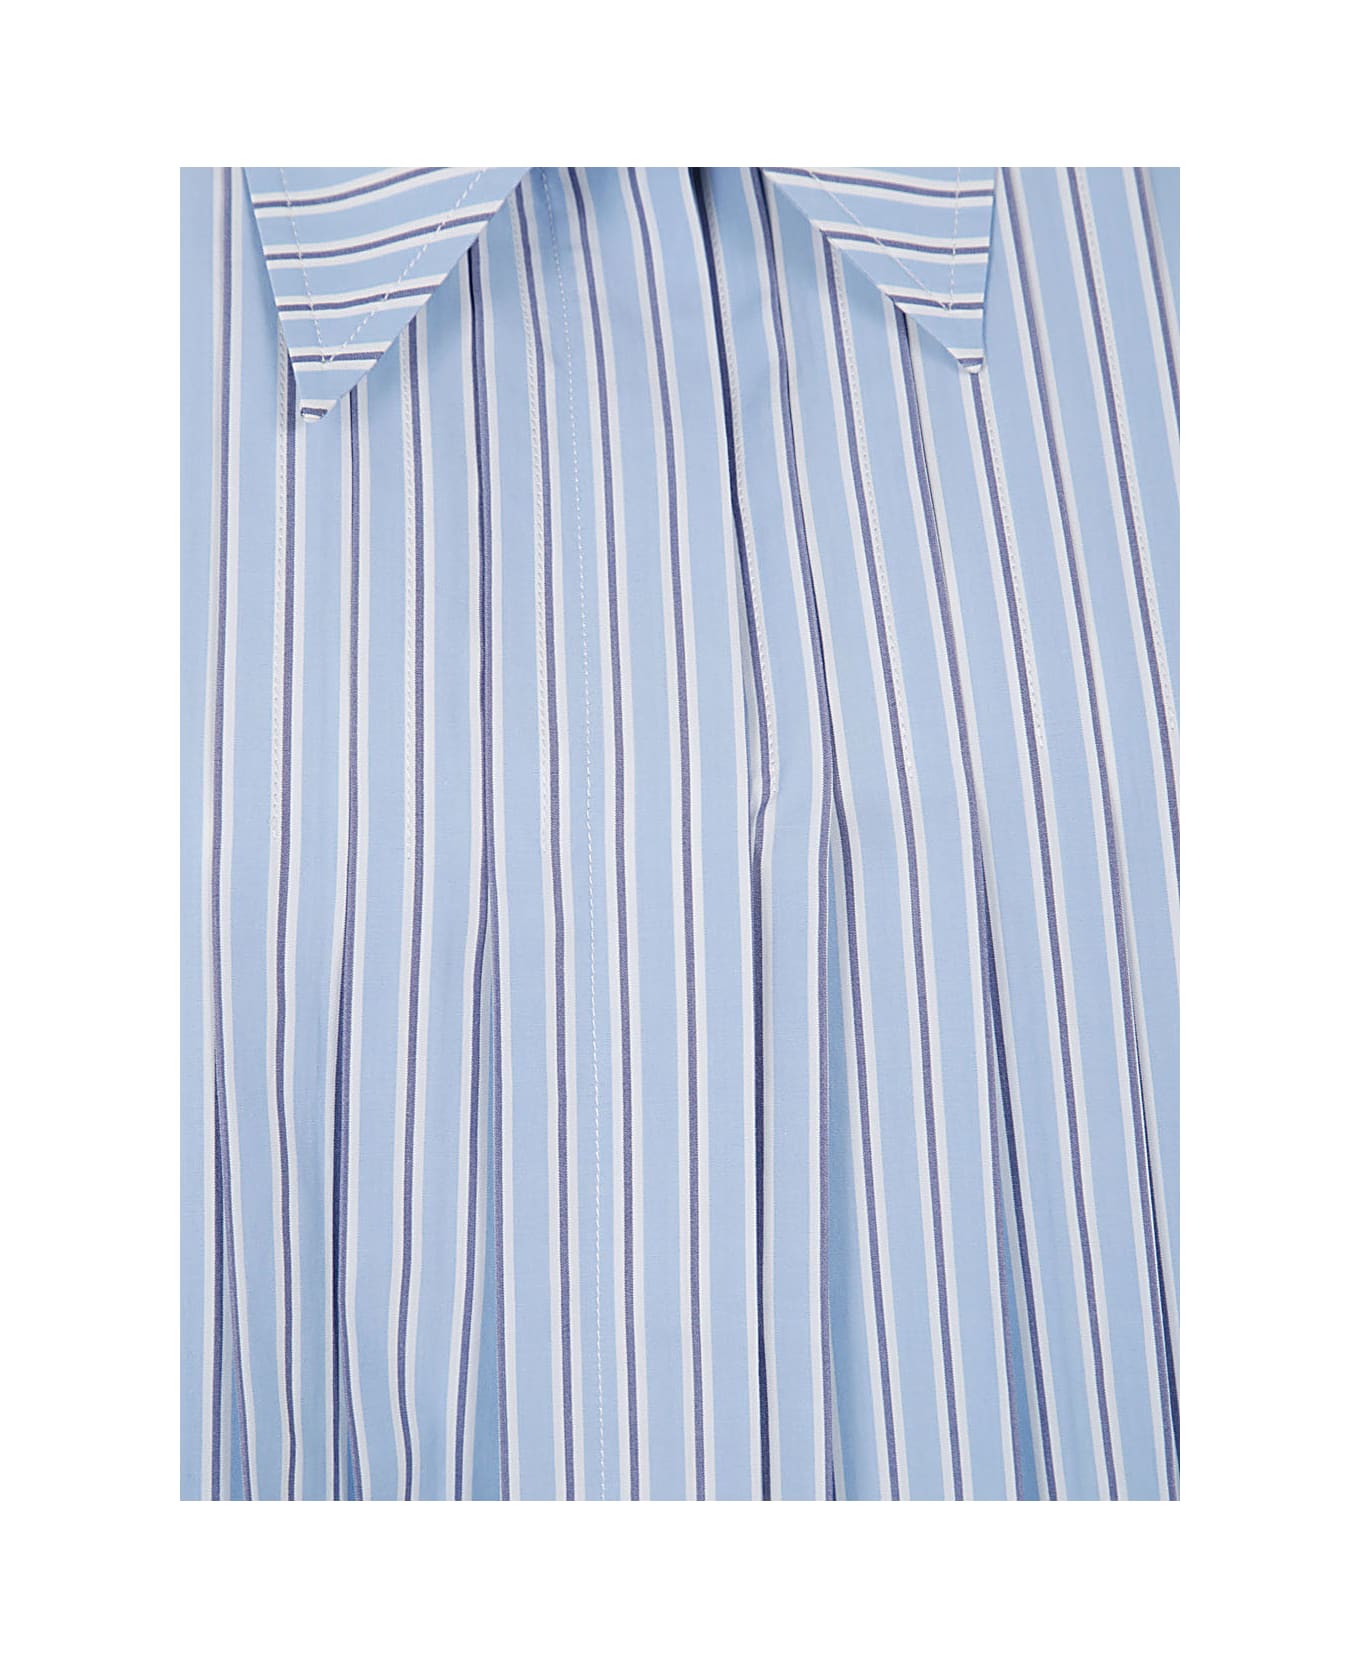 Alberta Ferretti Cropped Striped Shirt - Light Blue